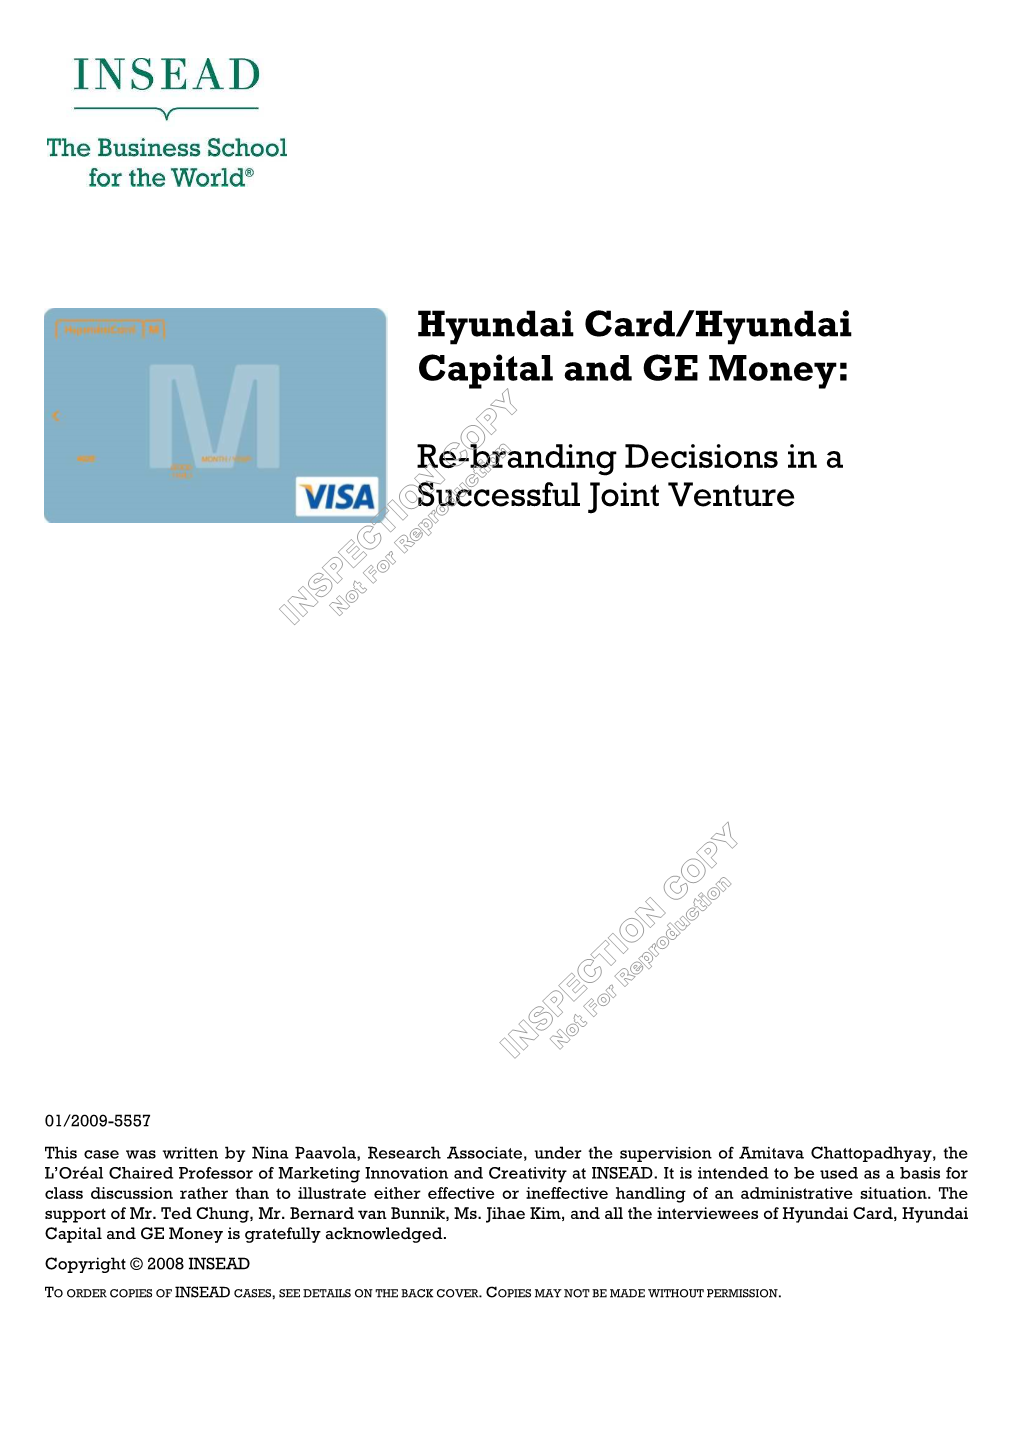 Hyundai Card/Hyundai Capital and GE Money